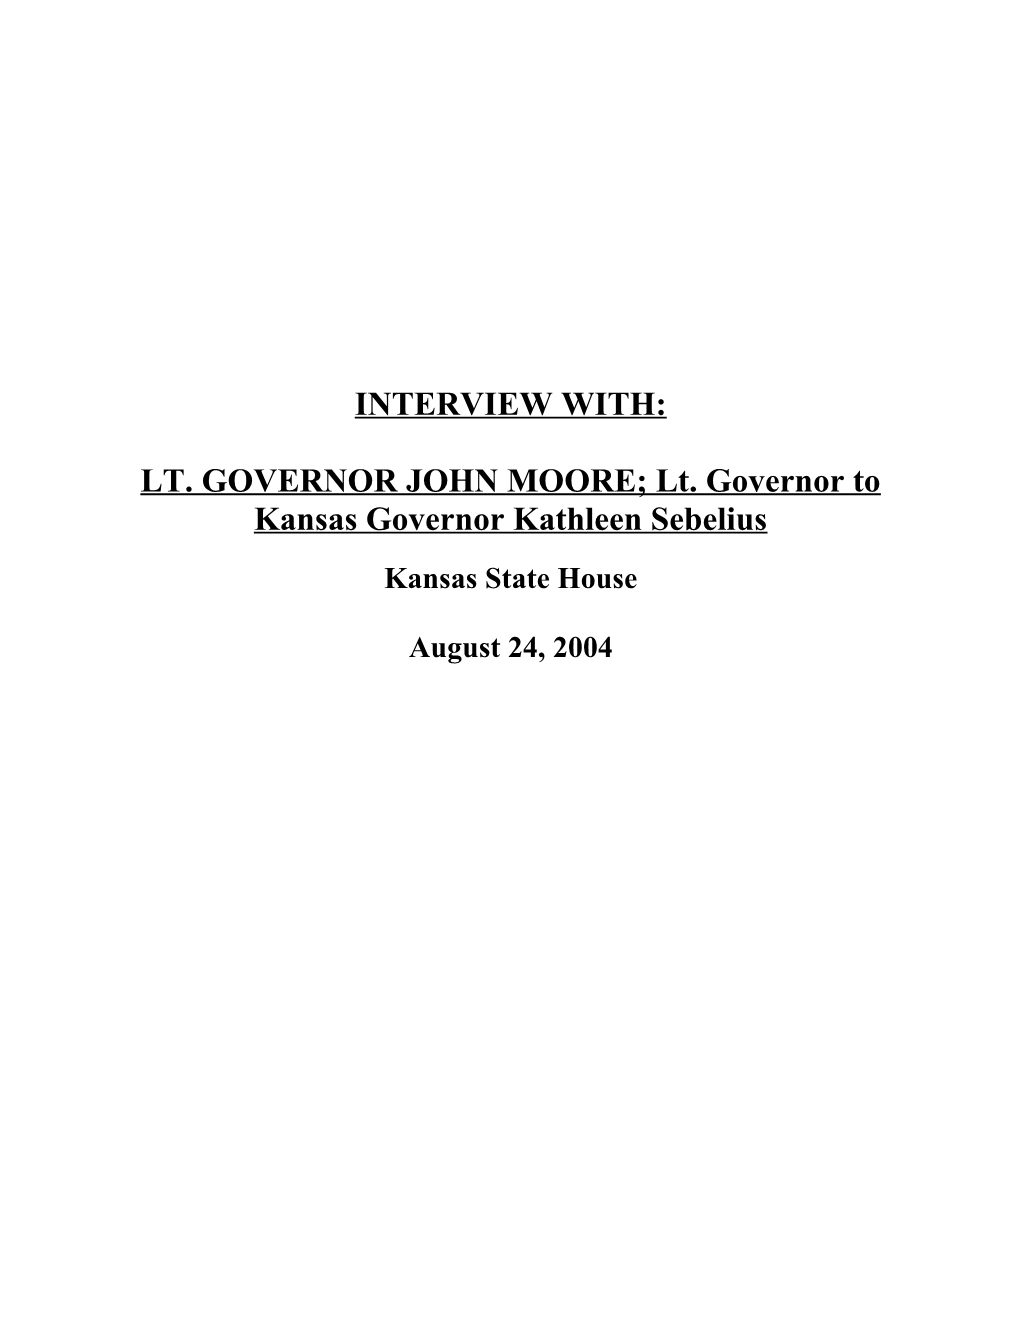 LT. GOVERNOR JOHN MOORE; Lt. Governor to Kansas Governor Kathleen Sebelius